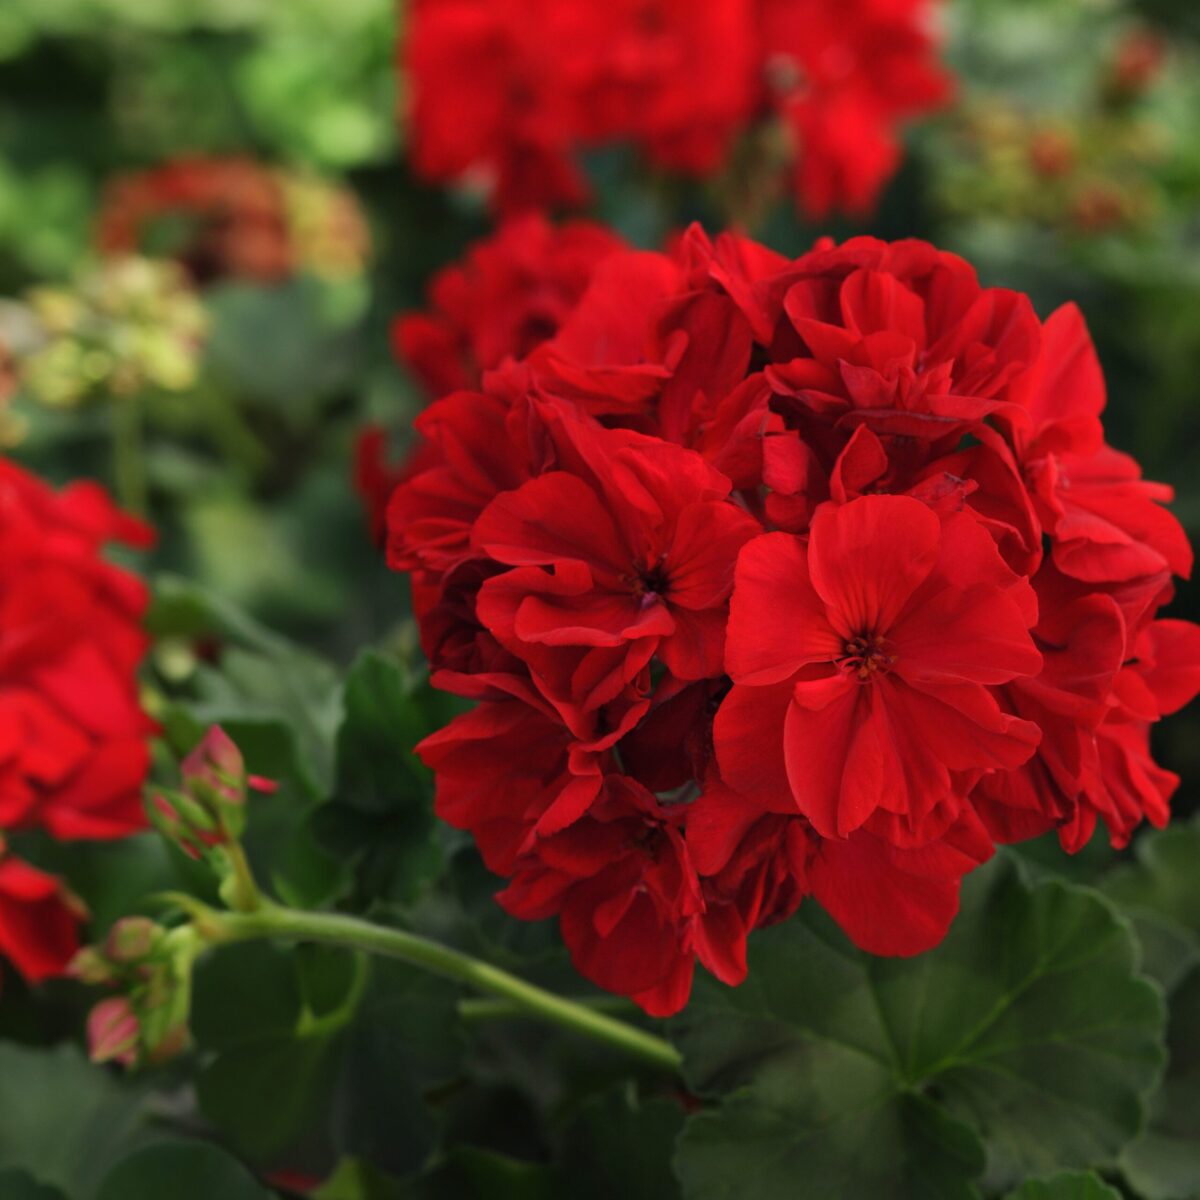 Fantasia Dark Red Geranium adding a luxurious dark red hue to a vibrant garden bed